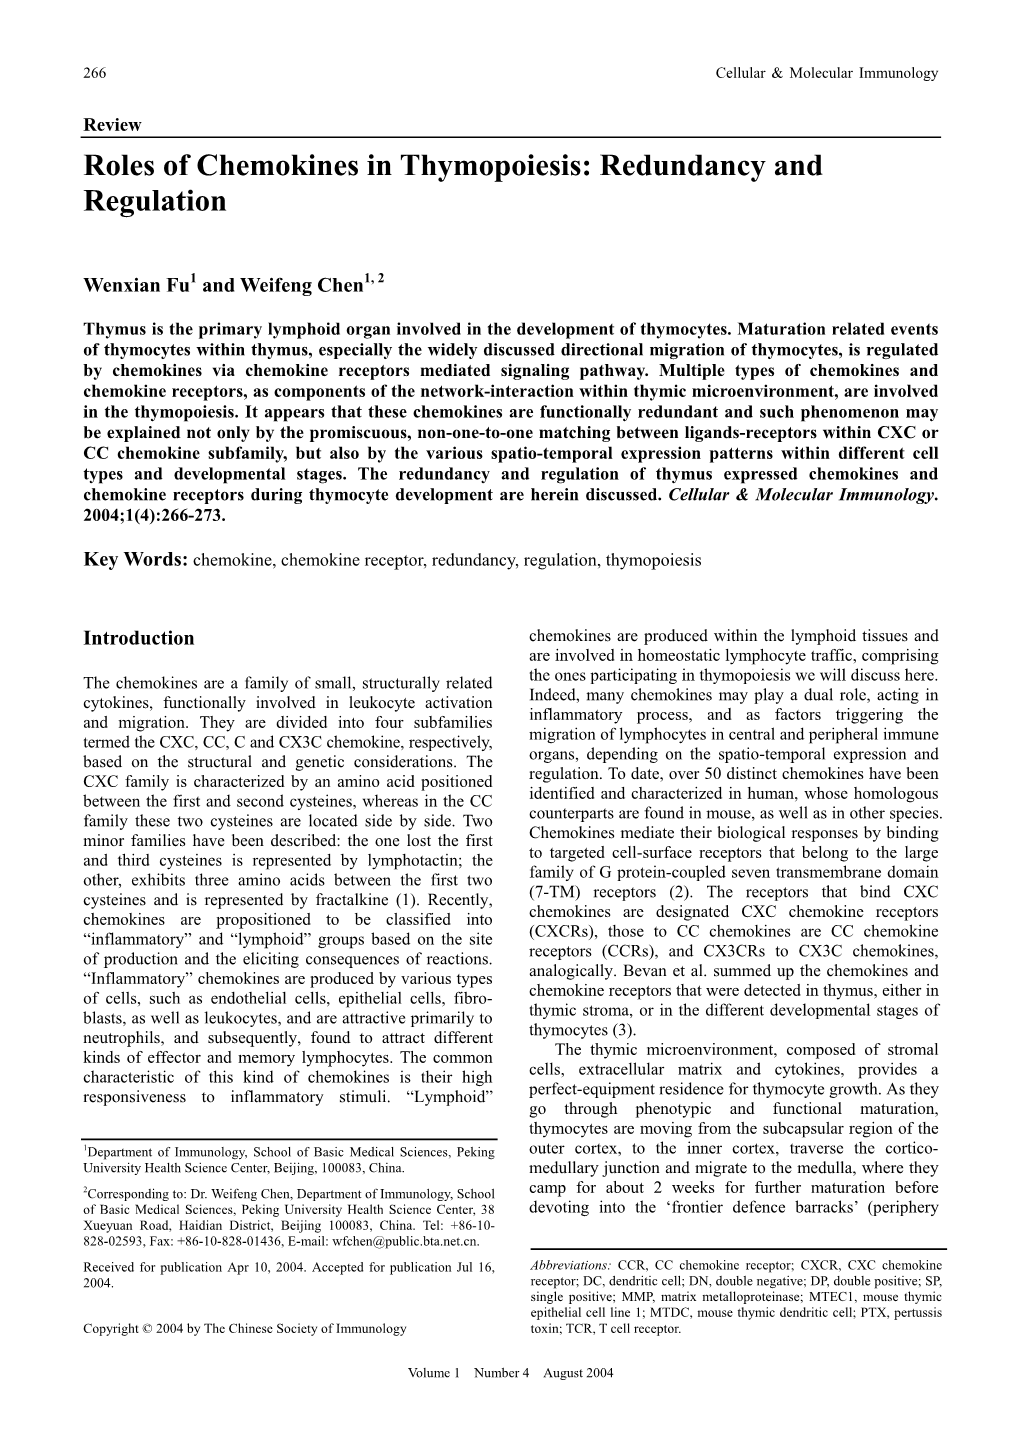 Roles of Chemokines in Thymopoiesis: Redundancy and Regulation